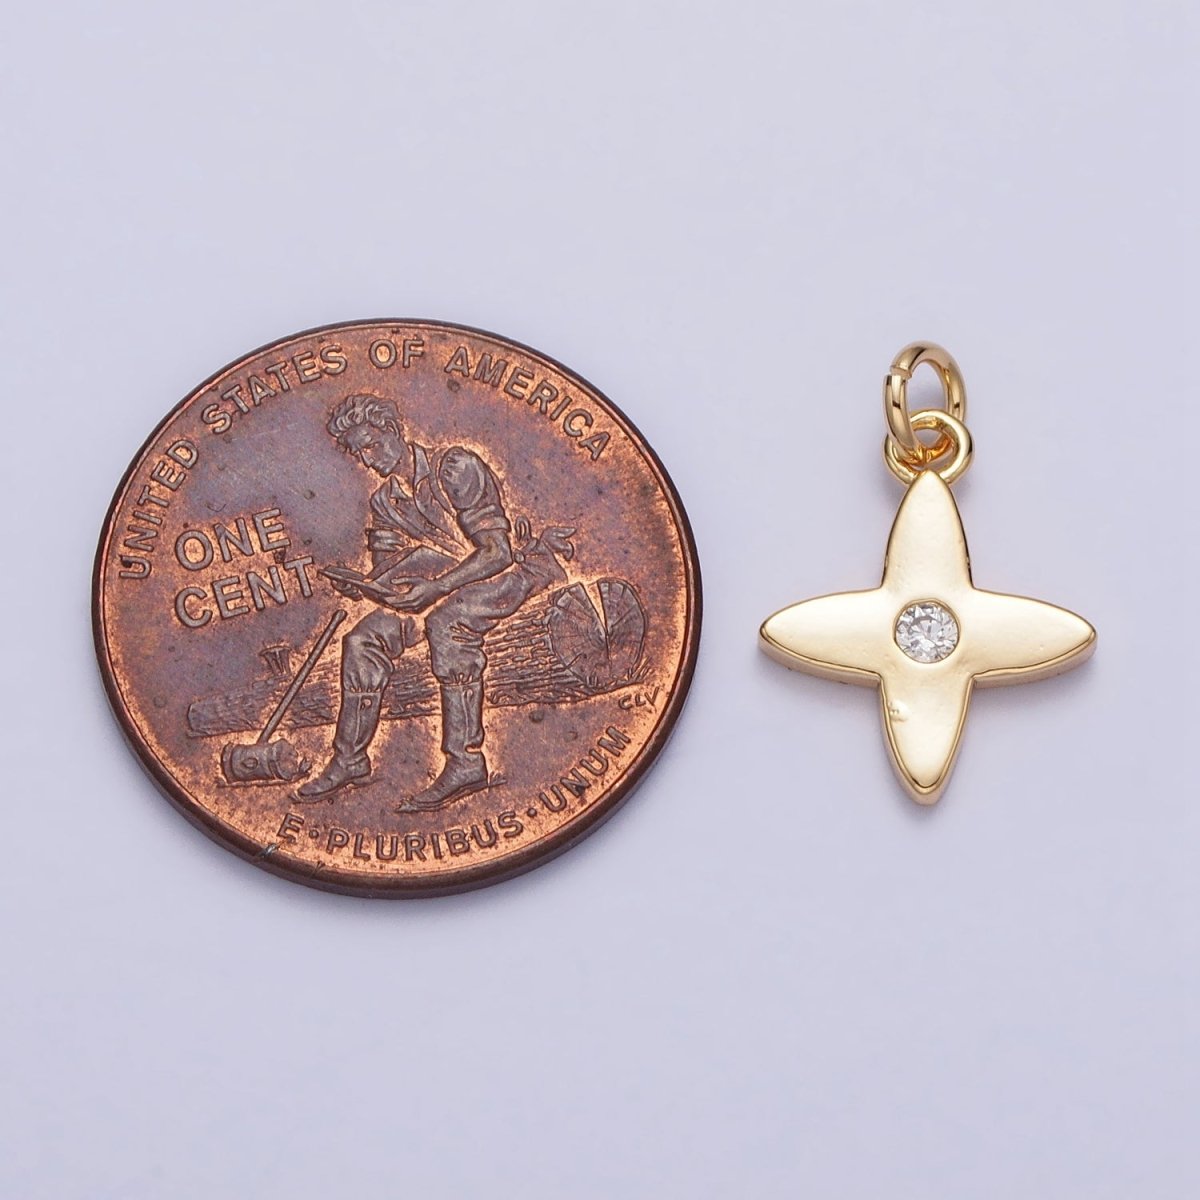 Mini Celestial Star Blossom Flower CZ Charm in Gold & Silver | AC224 AC303 - DLUXCA